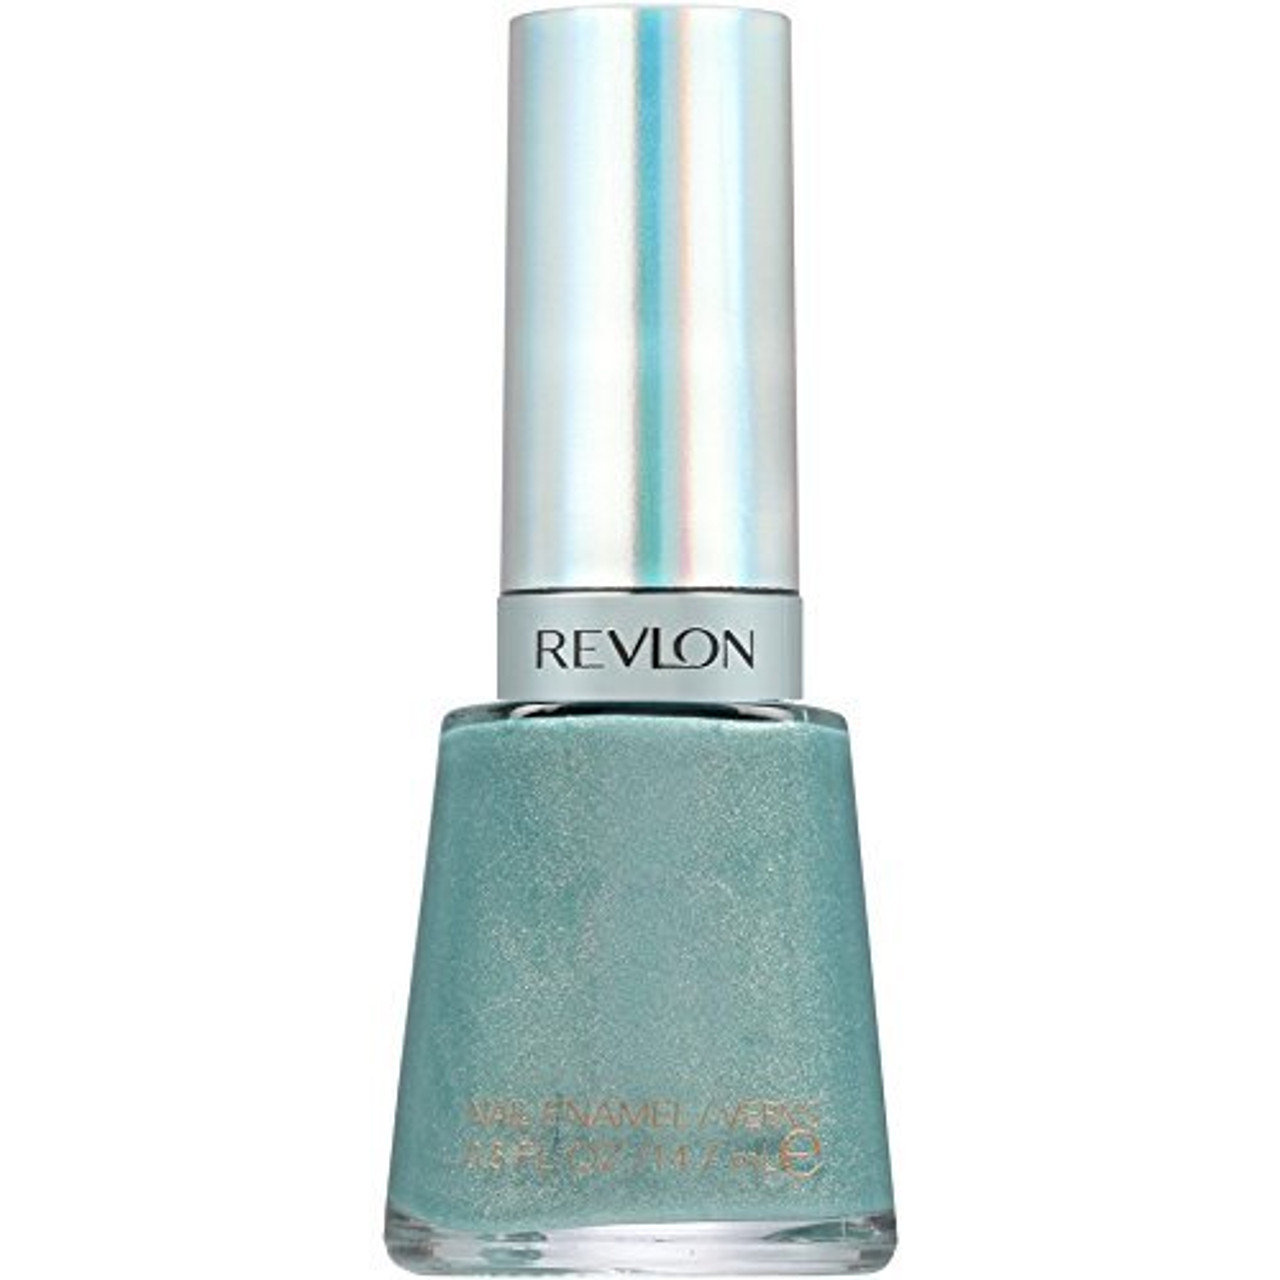 Revlon Nail Enamel, Chip Resistant Nail Polish, Glossy Shine Finish, in  Blue/Green, 115 Fairy Dust,  oz - Name Brand Overstock